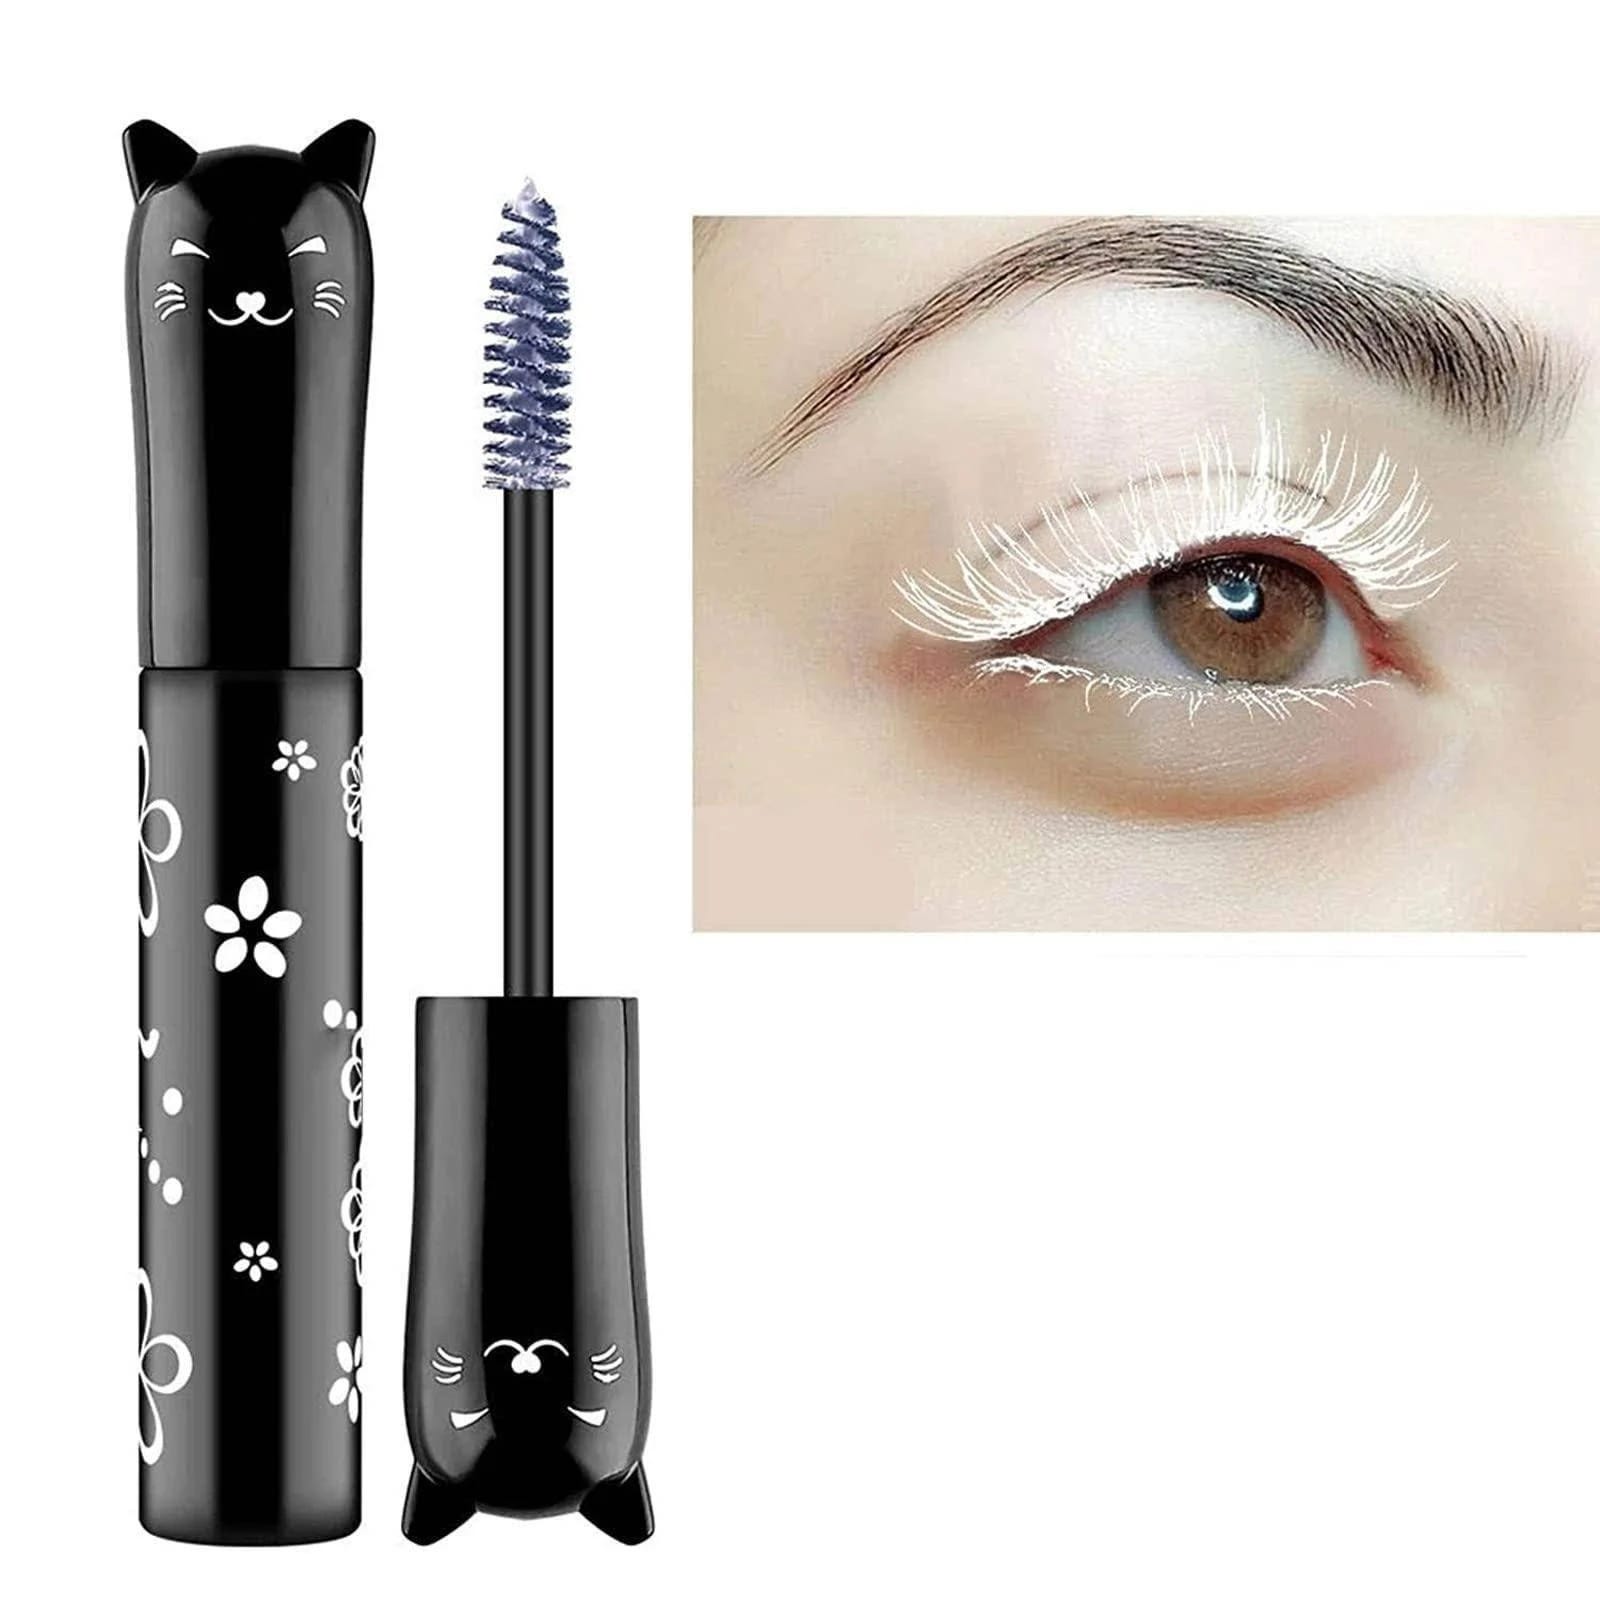 White Mascara for Enhanced Eye Makeup | Image